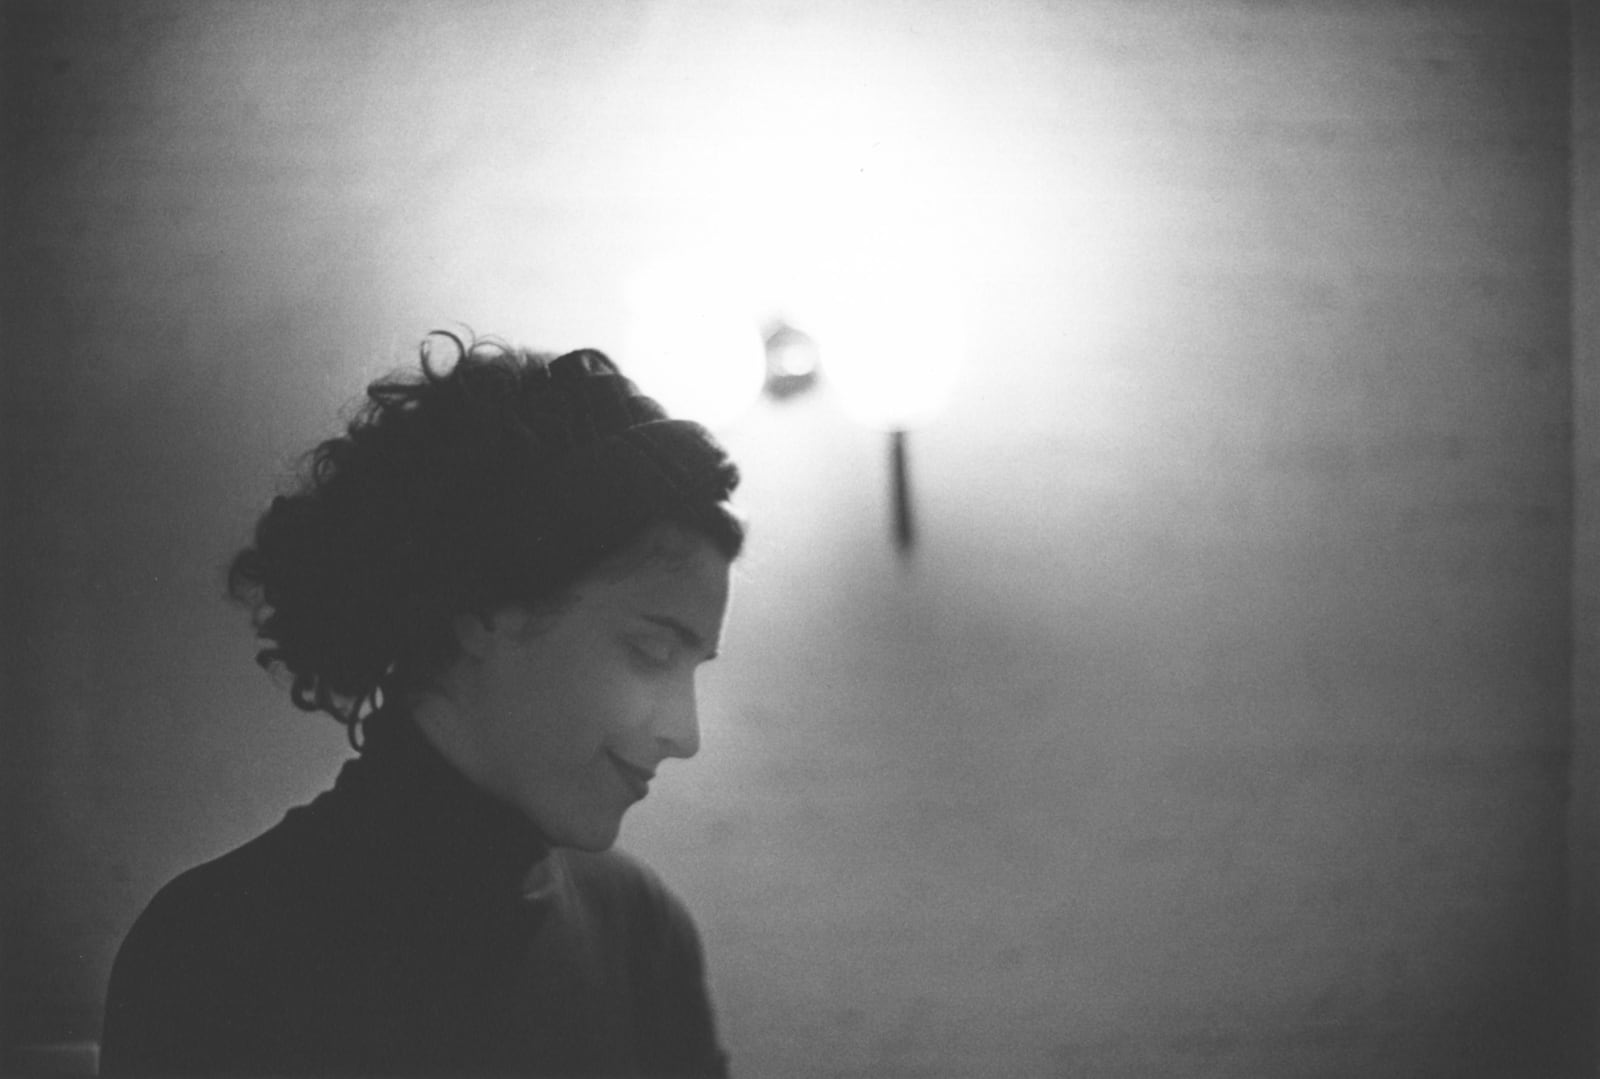 Tomio Seike, TSZ 202-6 Untitled - Paris, Zoe smiling profile against blank wall, 1984